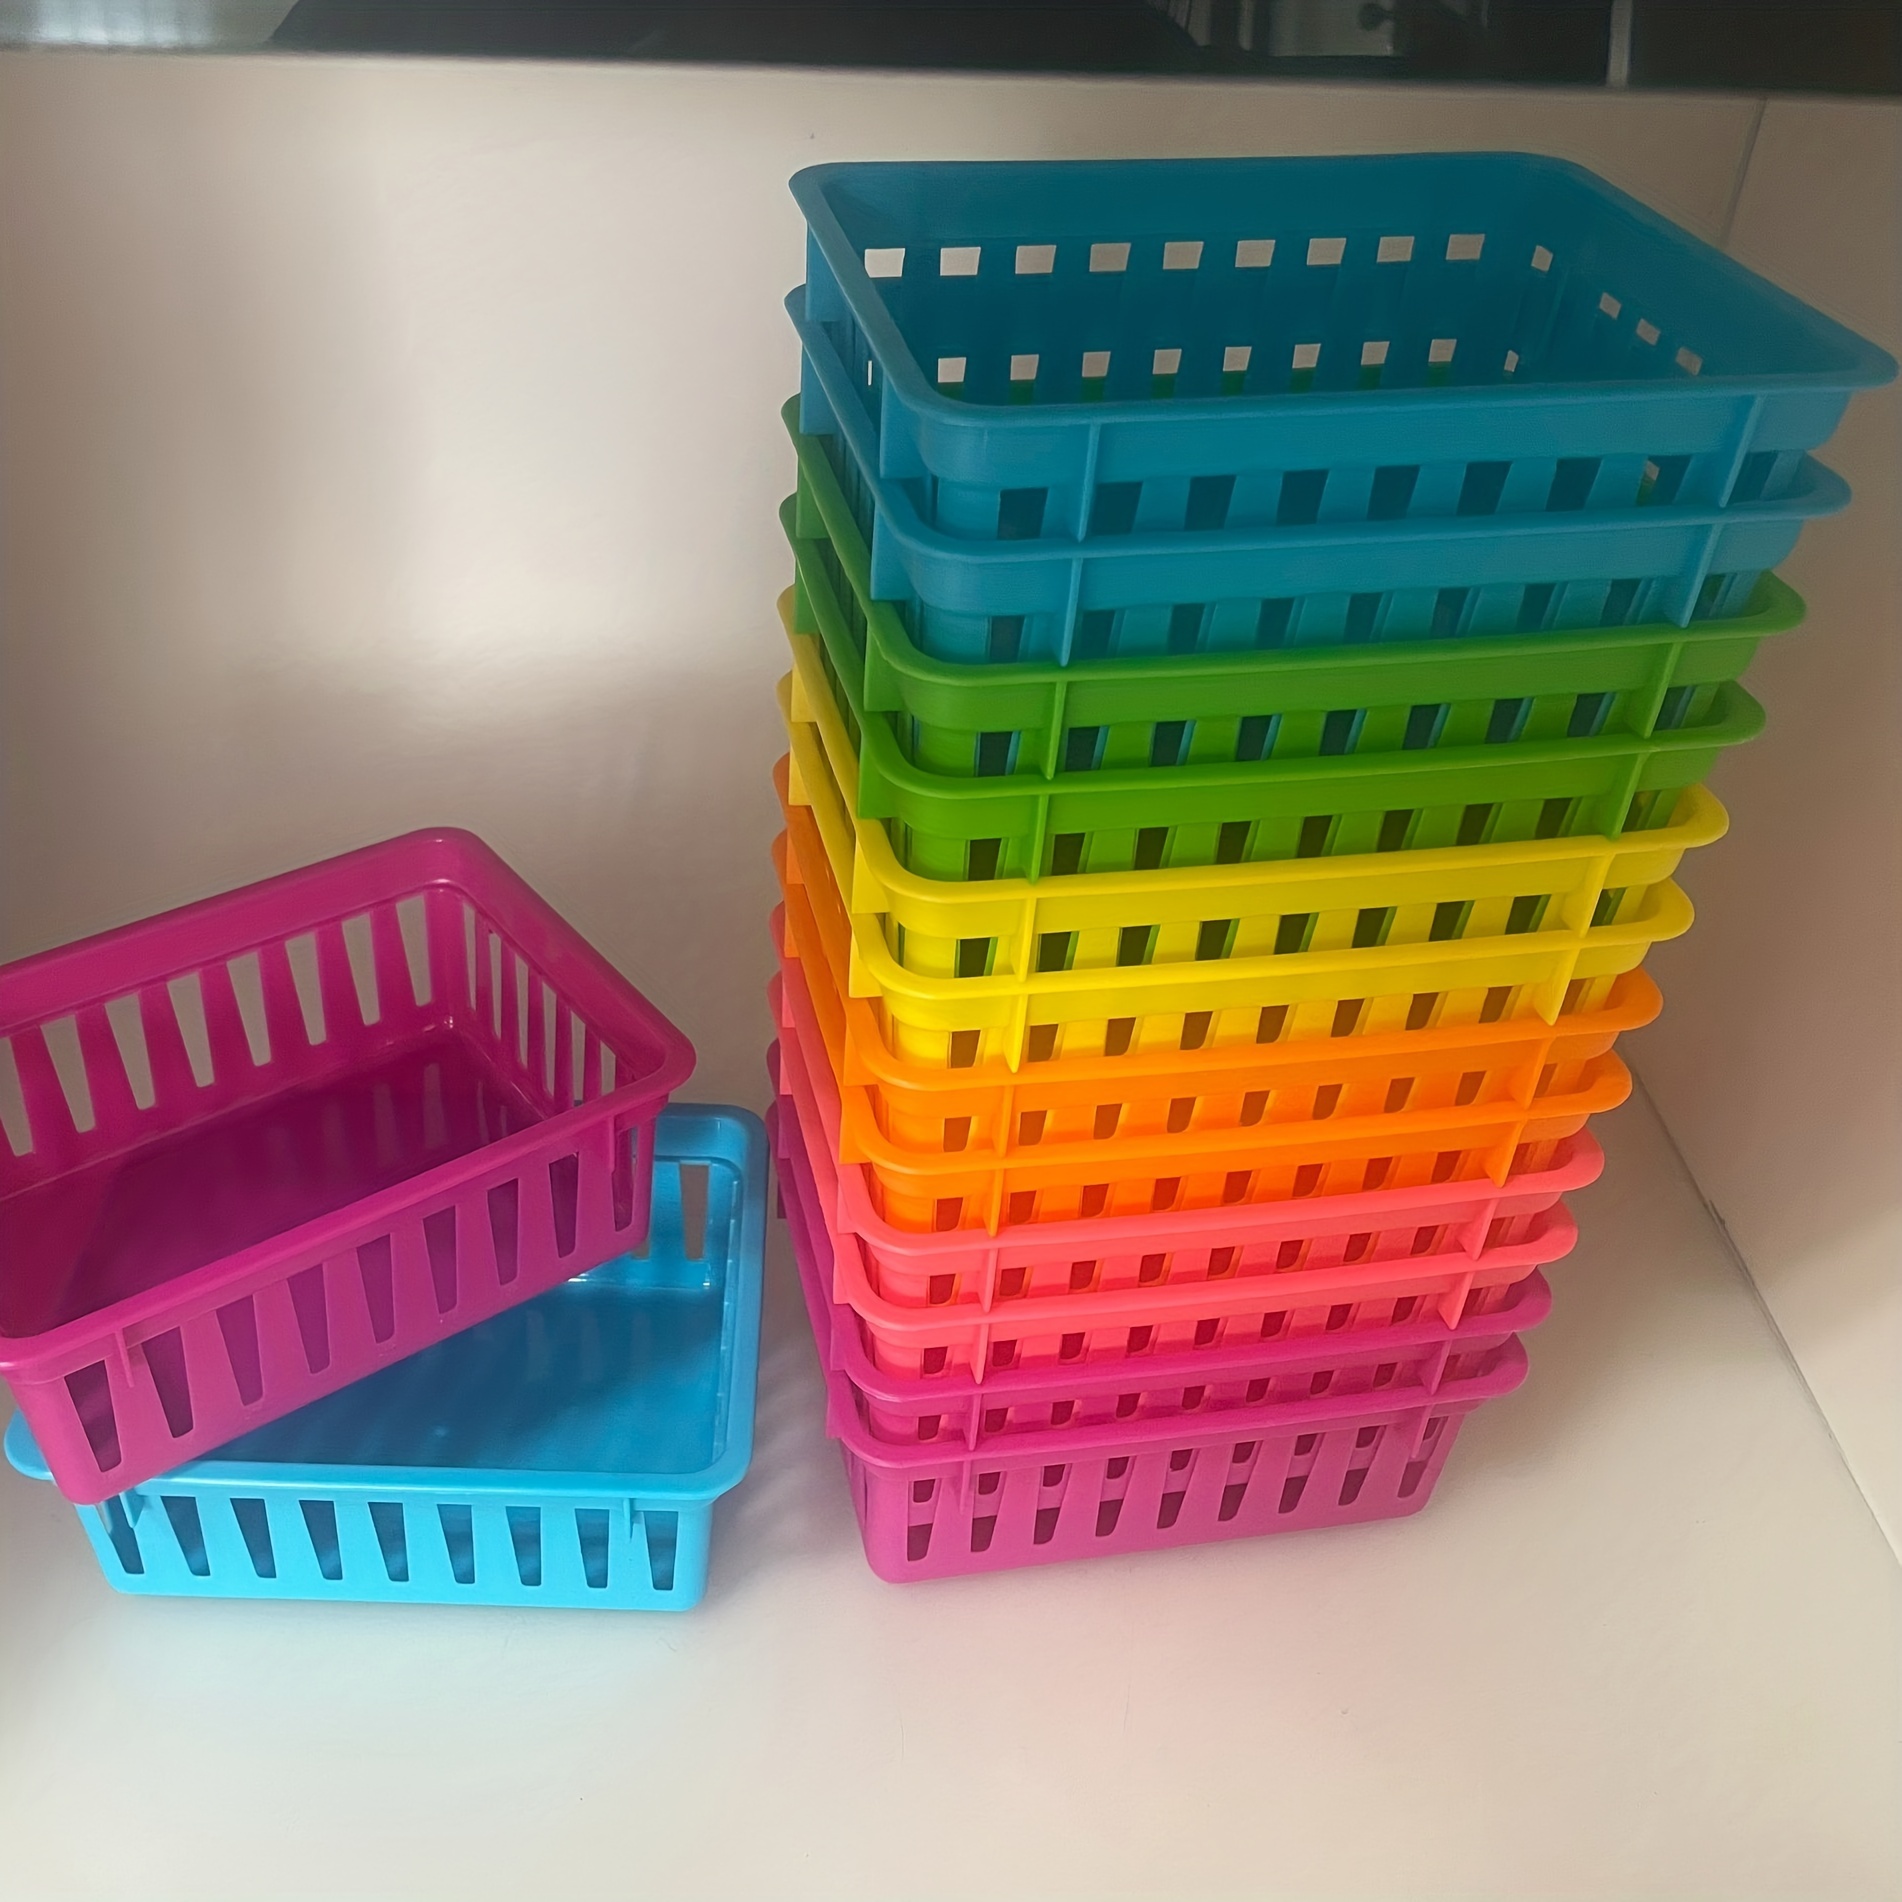 8pcs 4 Colors Plastic Pen & Pencil Baskets Trays for Classroom Organizer  Storage for sale online